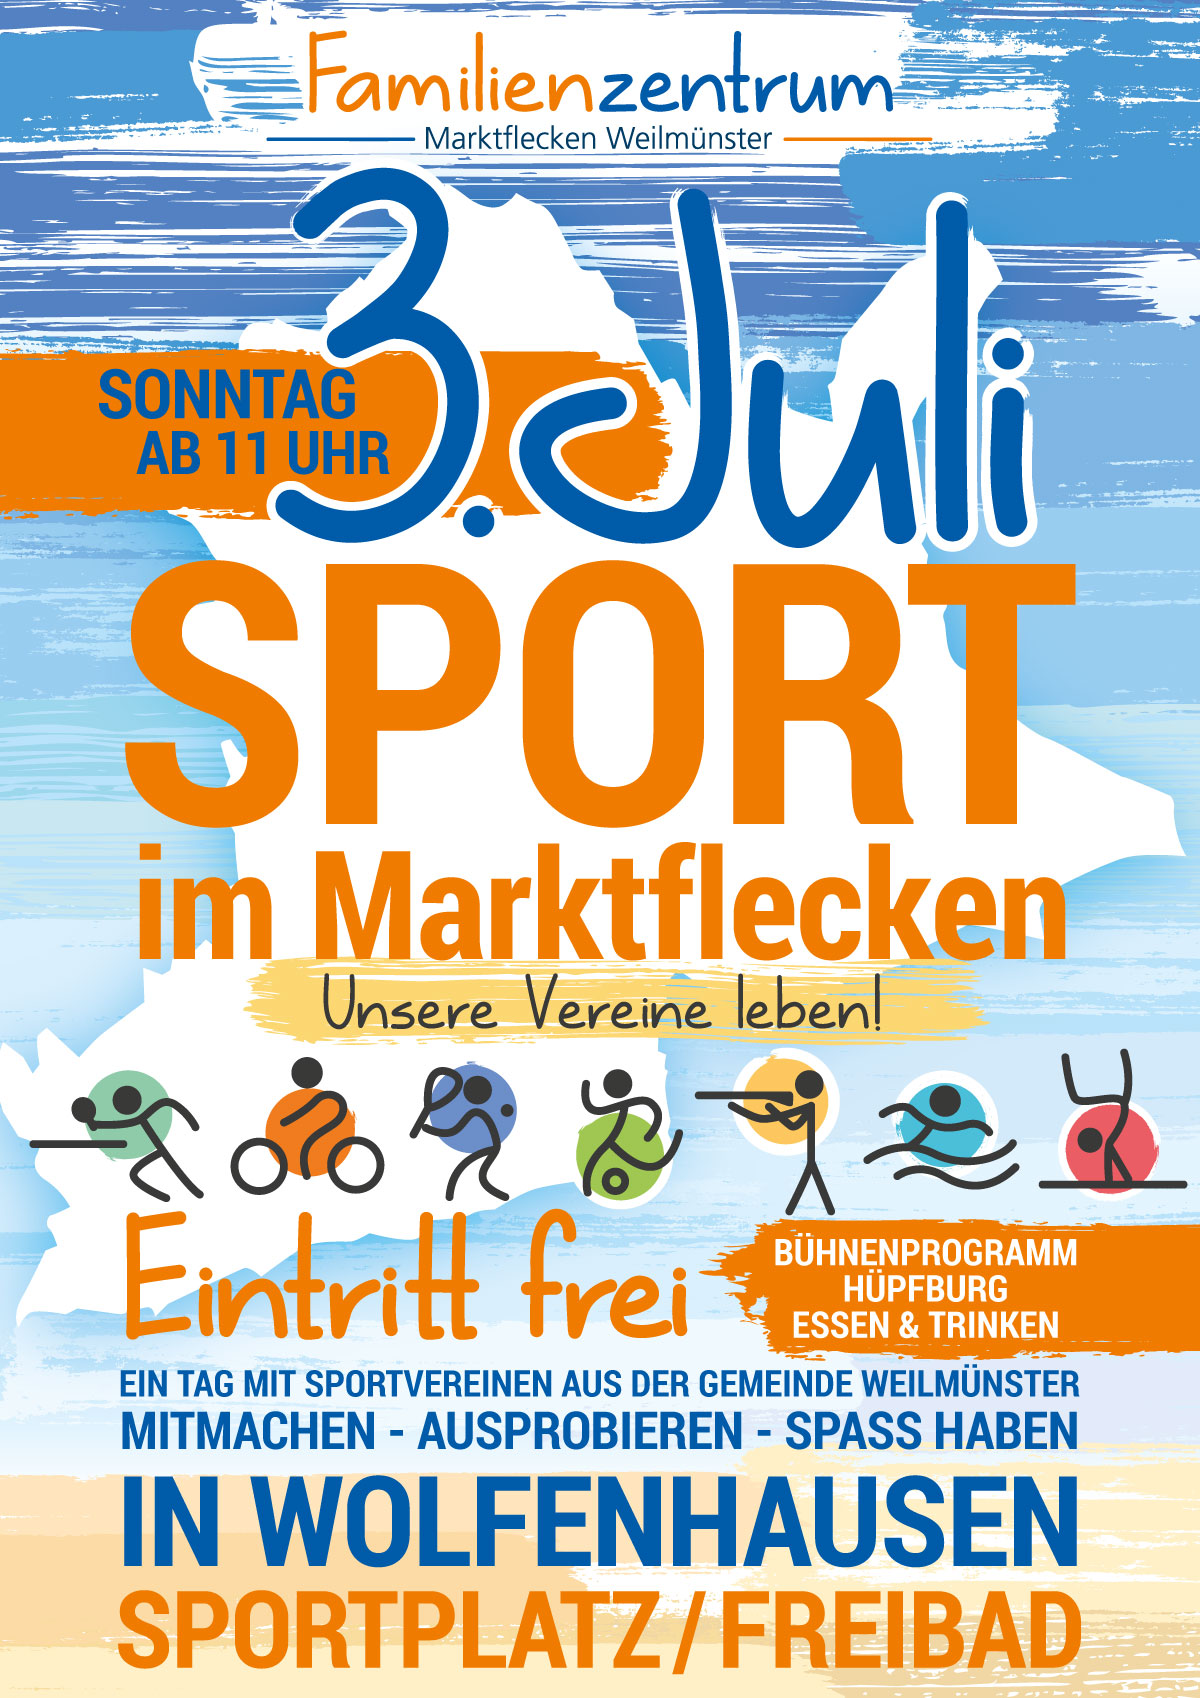 FamilienzentrumWLM Sporttag Plakat Entwurf4